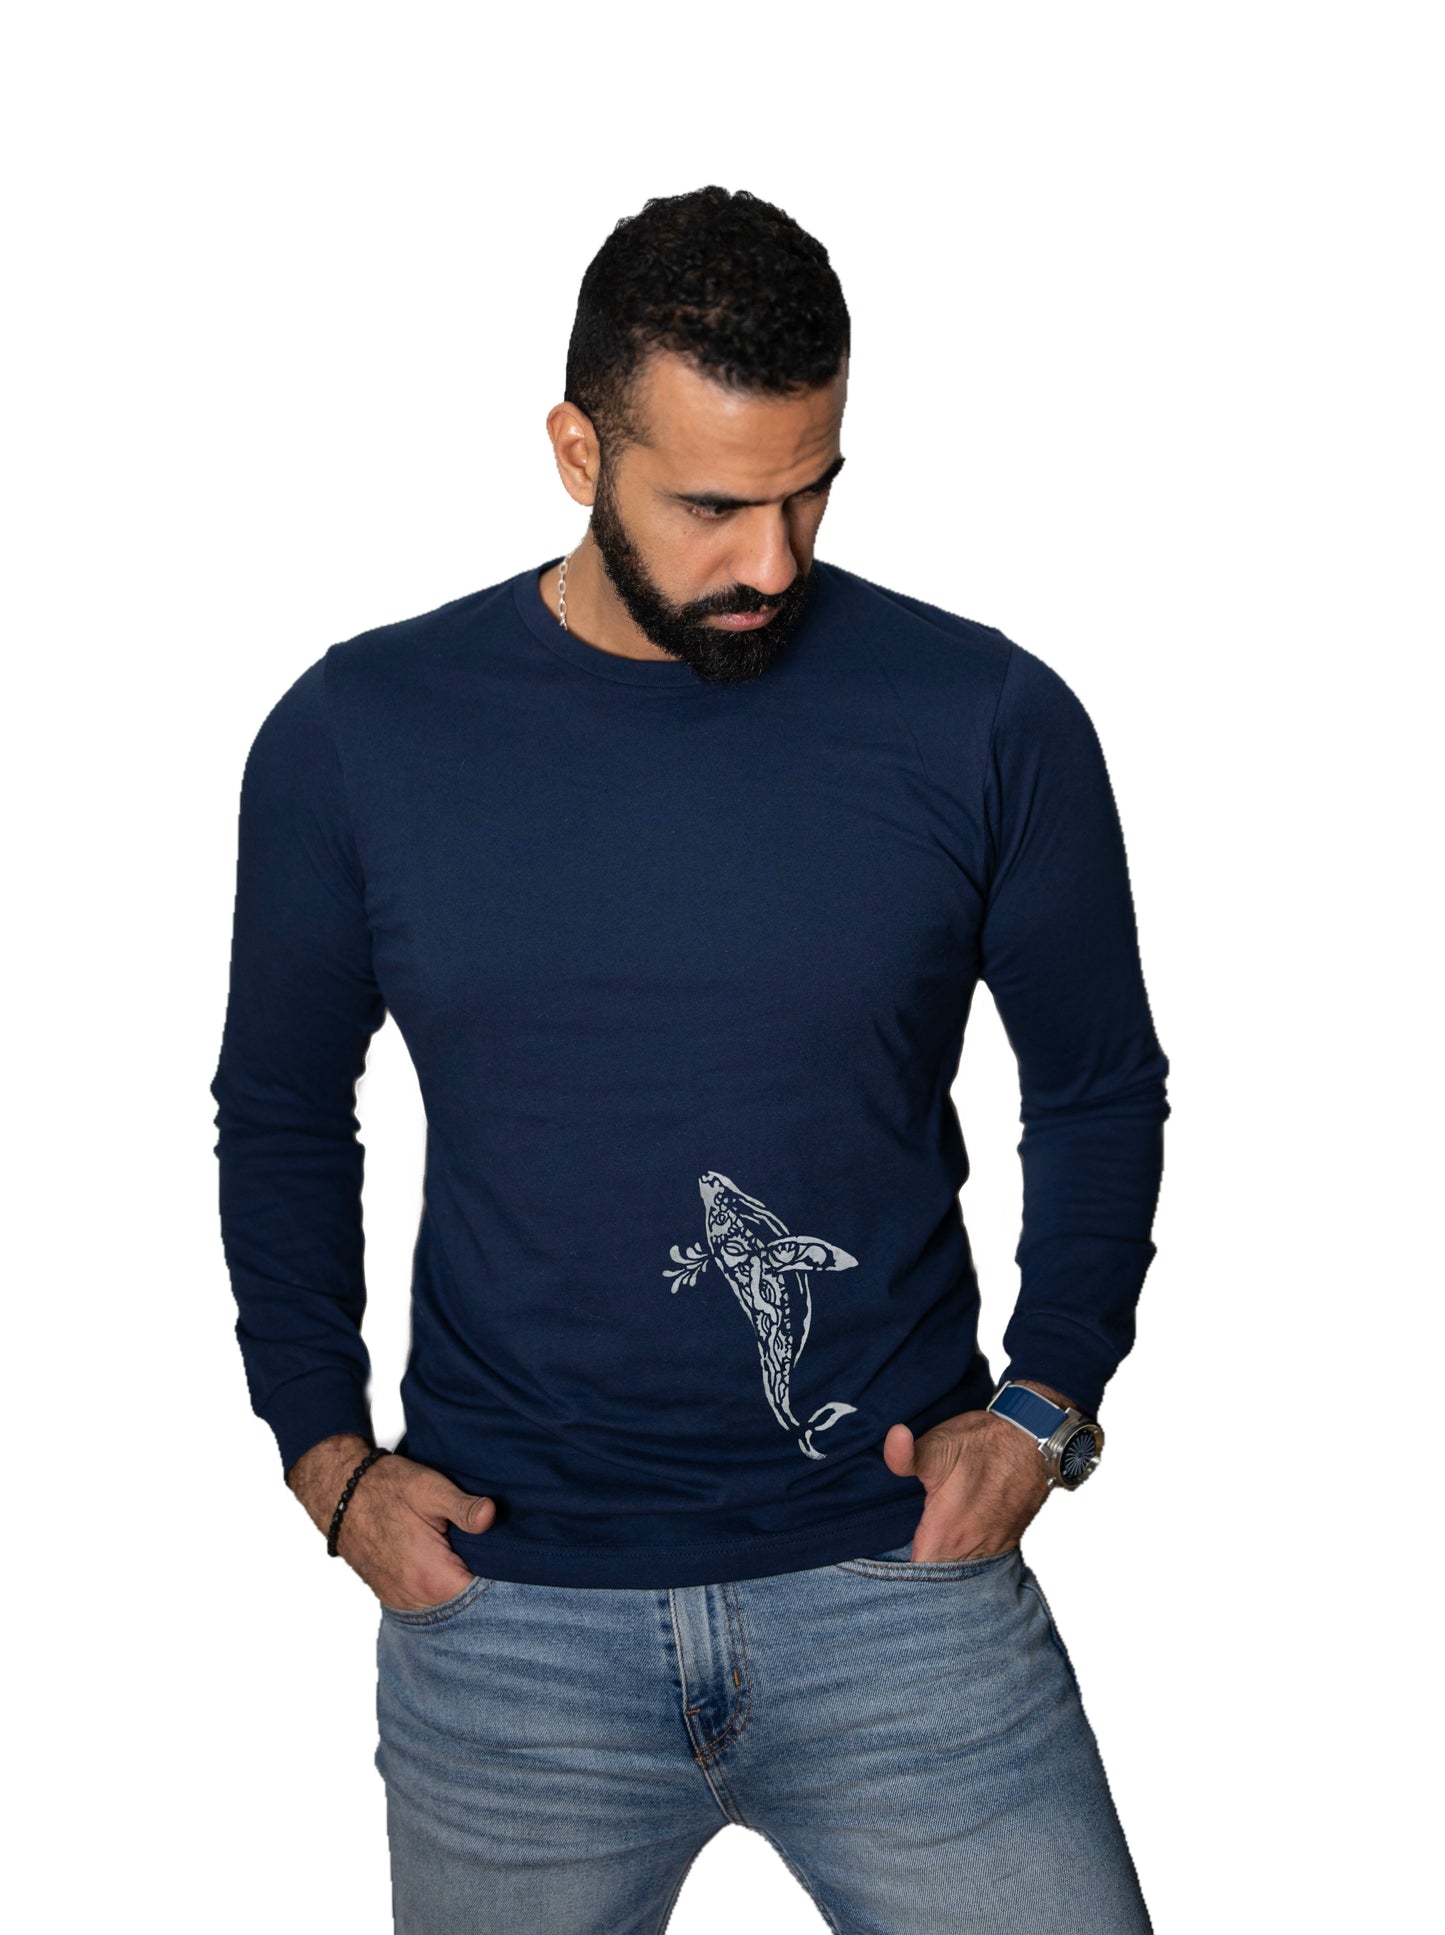 New Arrival - 100% Cotton Lightweight Sporty Long sleeve T-shirt (3D touch)